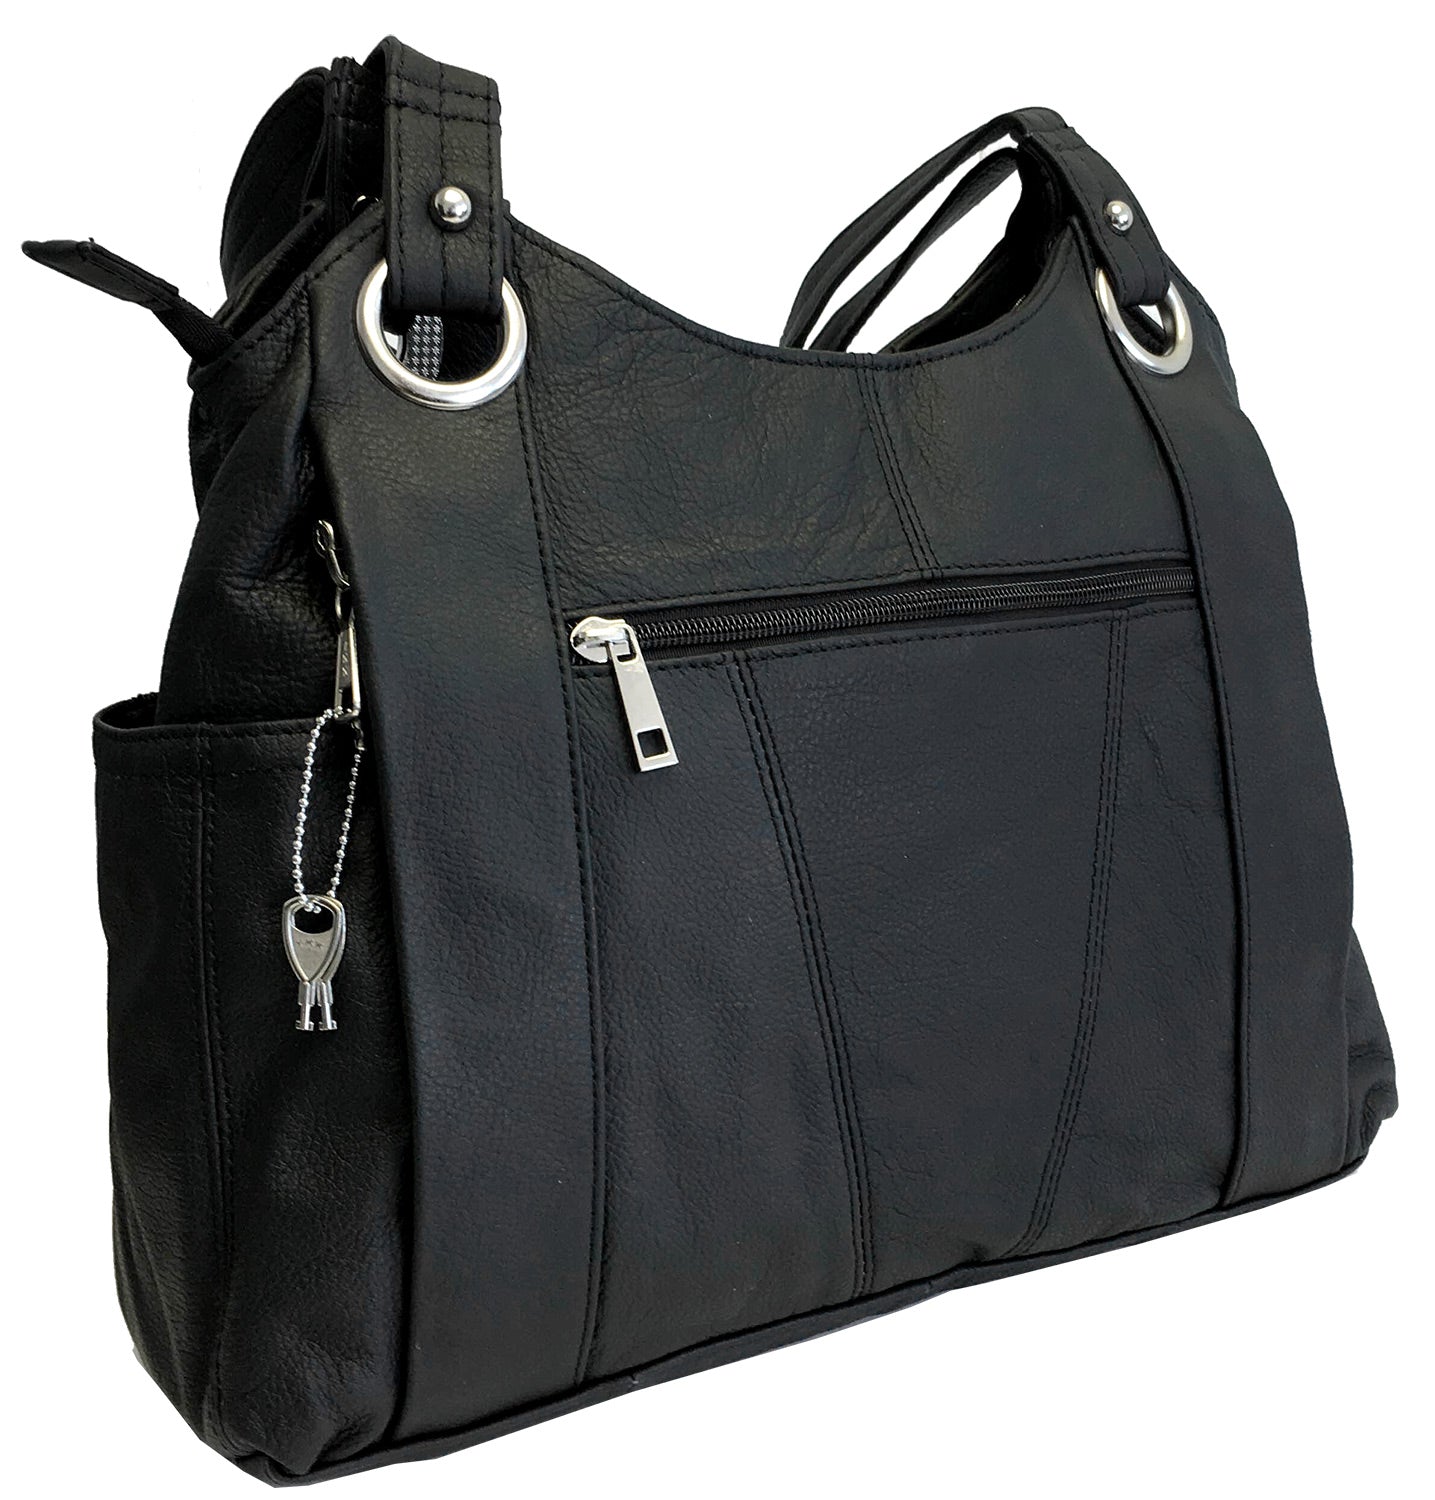 Concealed Carry Genuine Leather Shoulder Bag – ccwbags.com